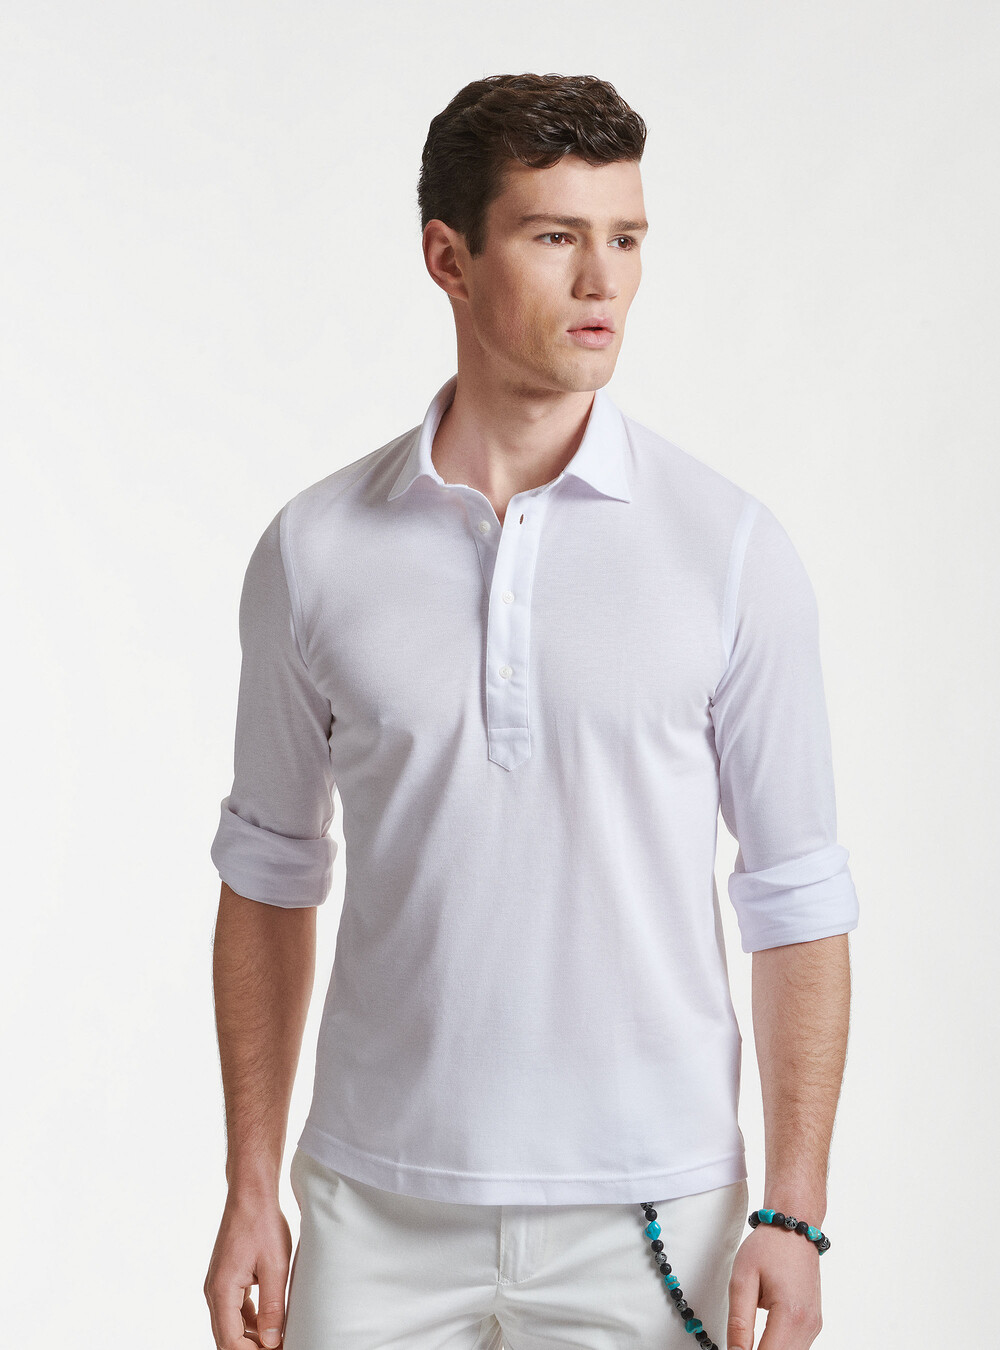 Polo camicia in cotone piquet | Gutteridge | catalog-gutteridge-storefront  Uomo